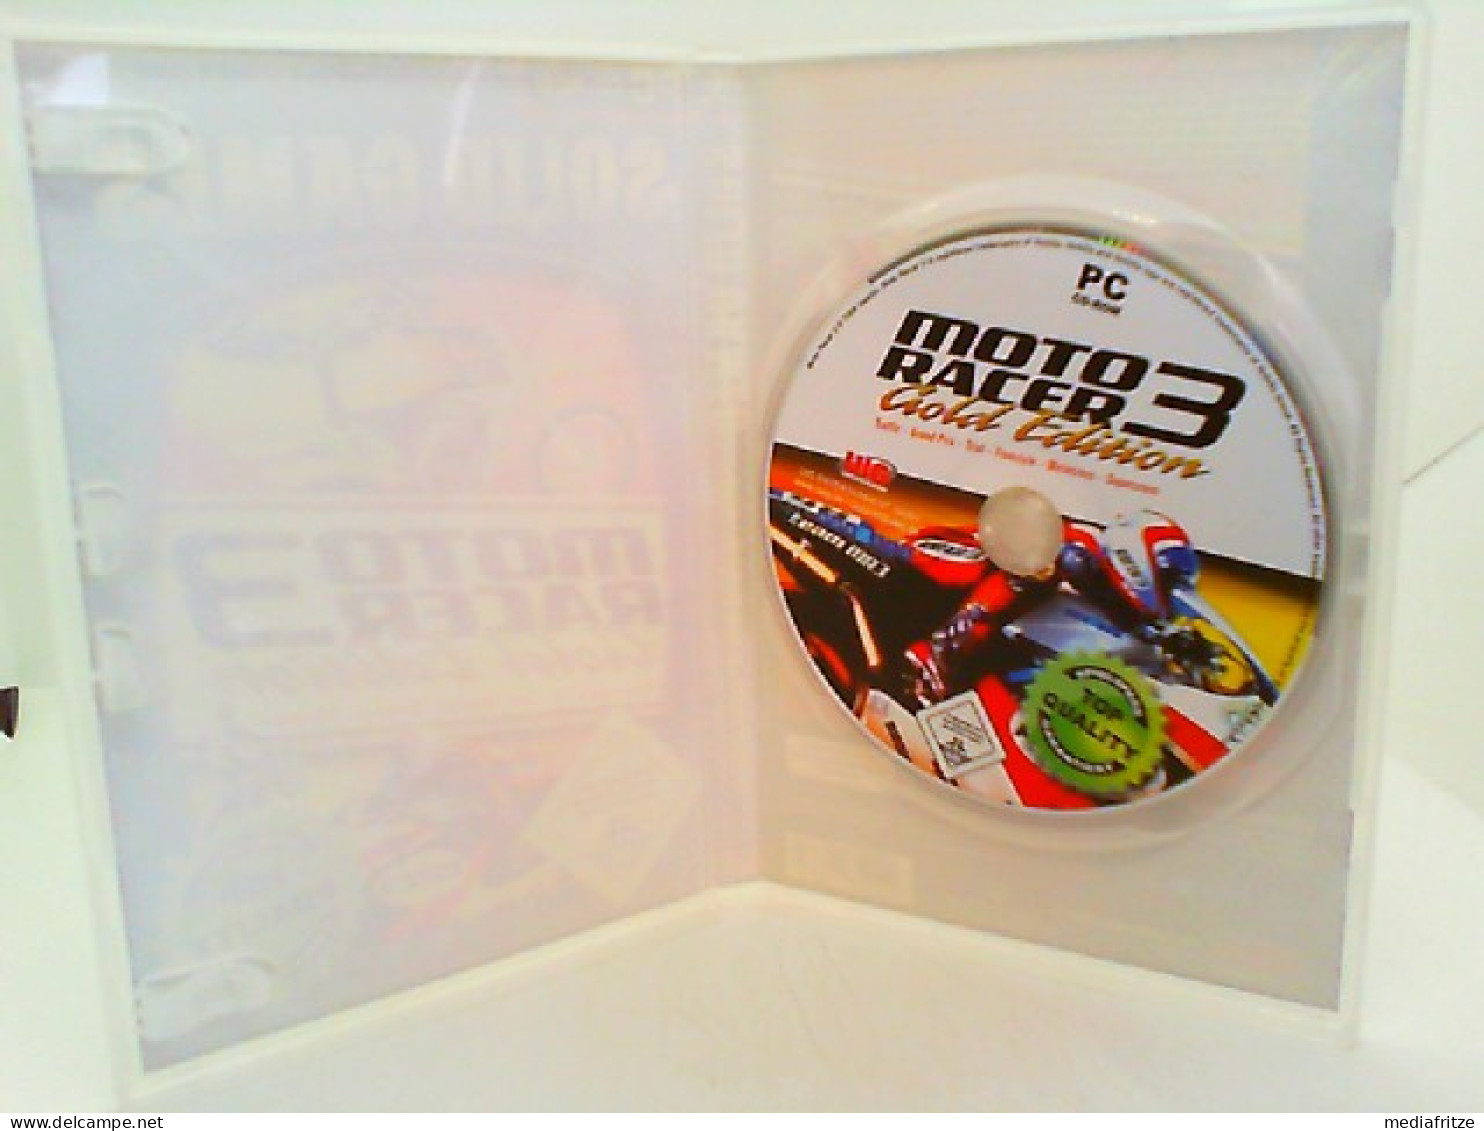 Solid Games - Moto Racer 3 Gold - Juegos PC